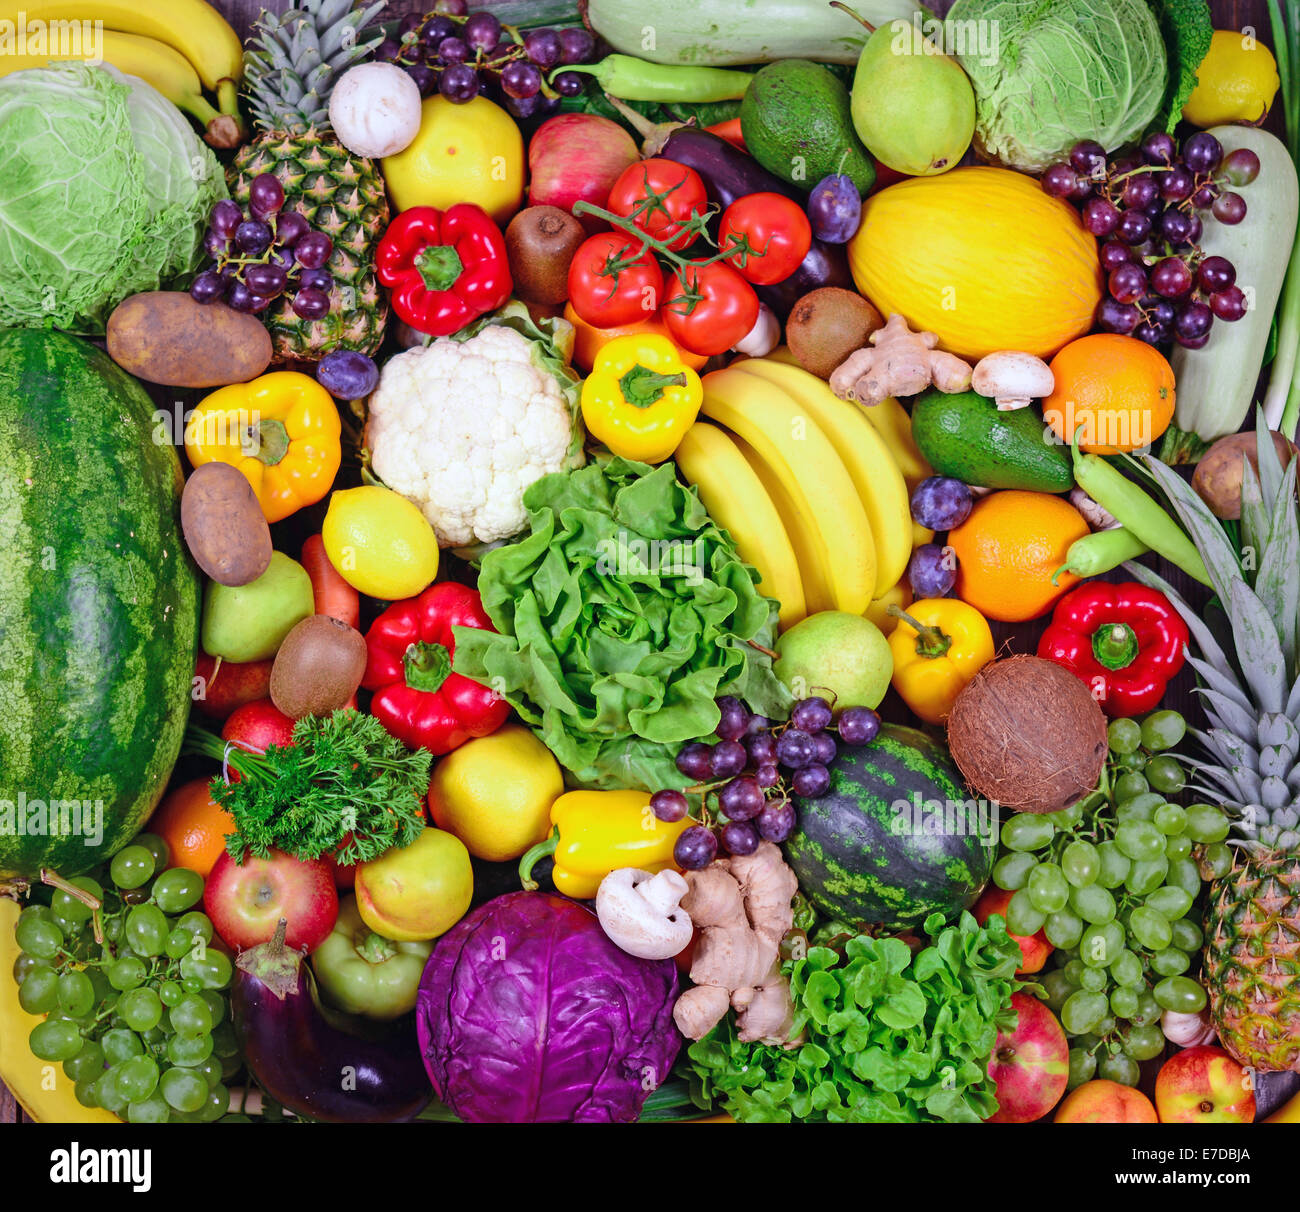 Un Grupo De Diversas Verduras Frescas Imagen de archivo - Imagen